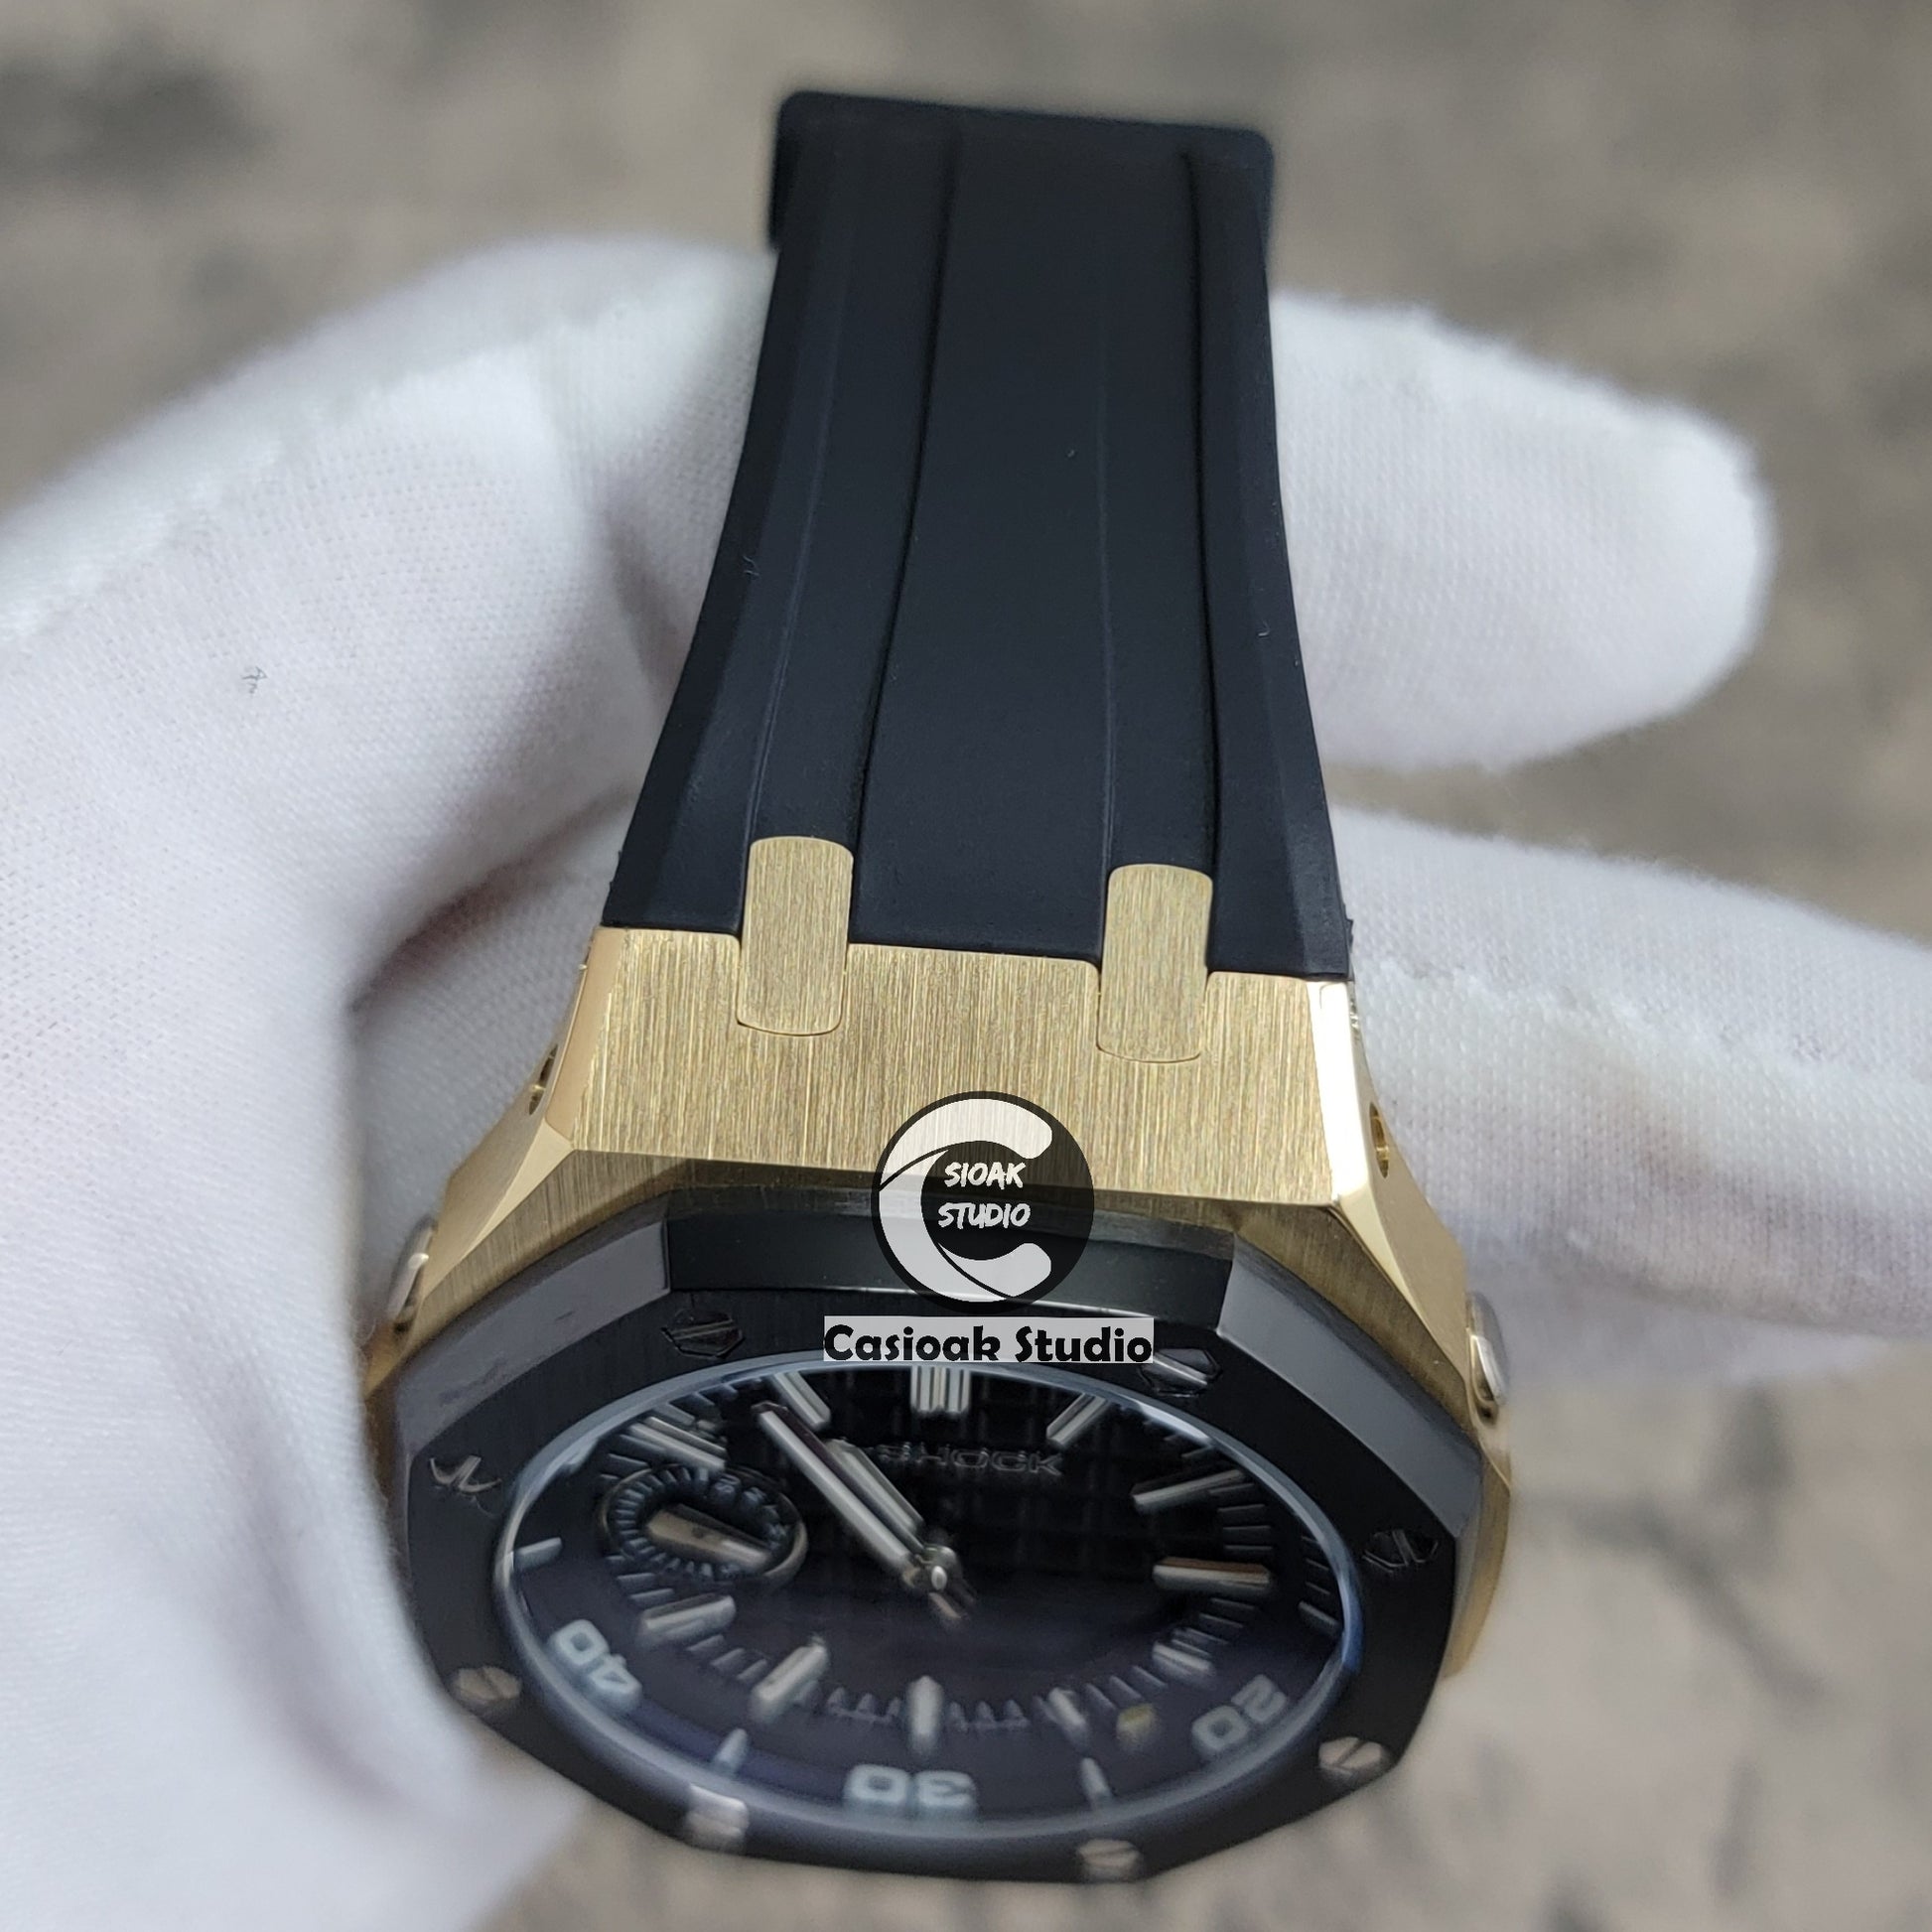 Casioak Mod Watch Gold Black Case Black Rubber Strap Strap Black Time Mark Black Dial 44mm Sapphire Crystal - Casioak Studio